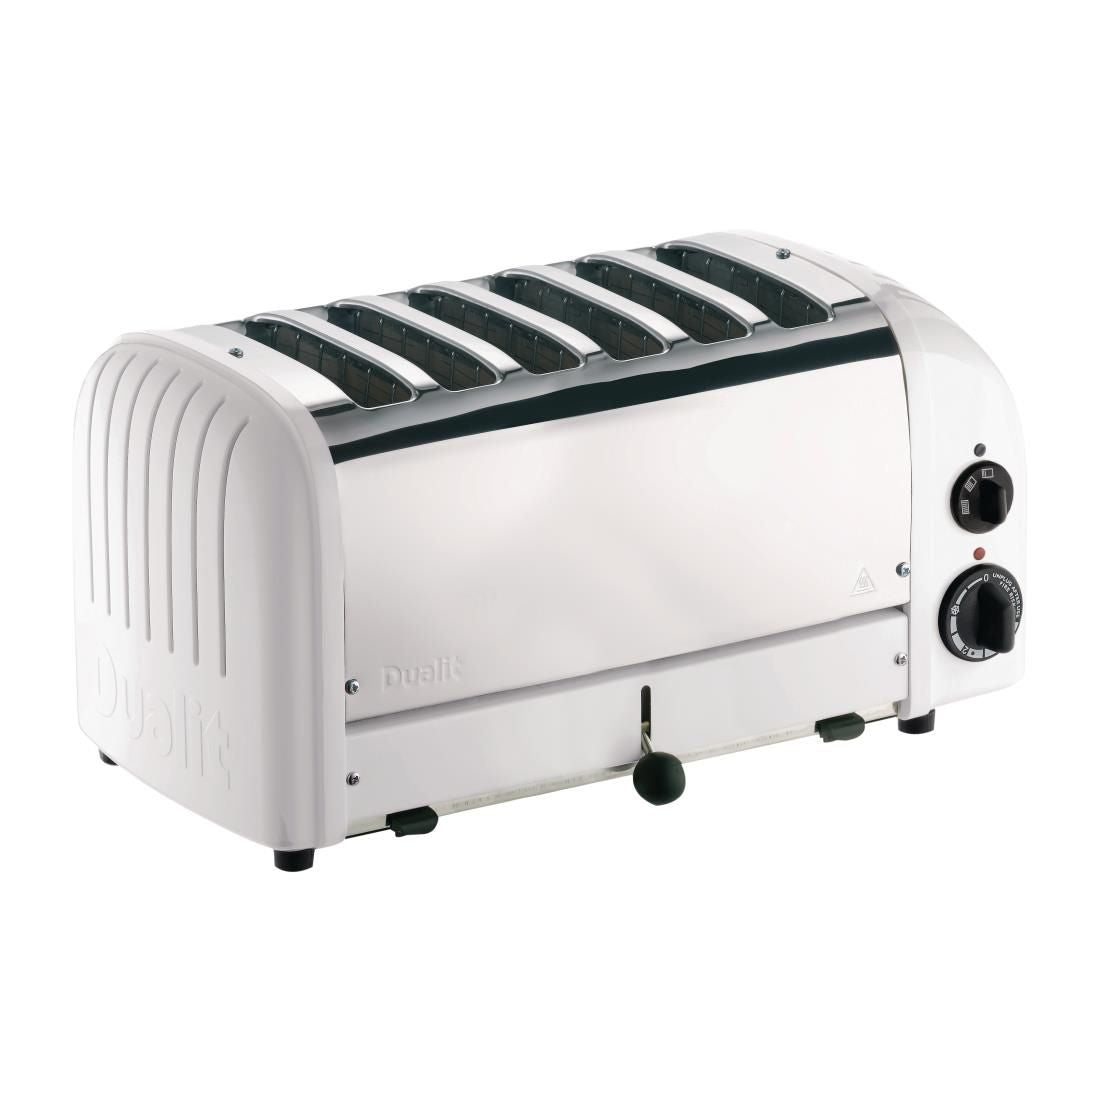 Dualit 6 Slice Vario Toaster White 60146 JD Catering Equipment Solutions Ltd